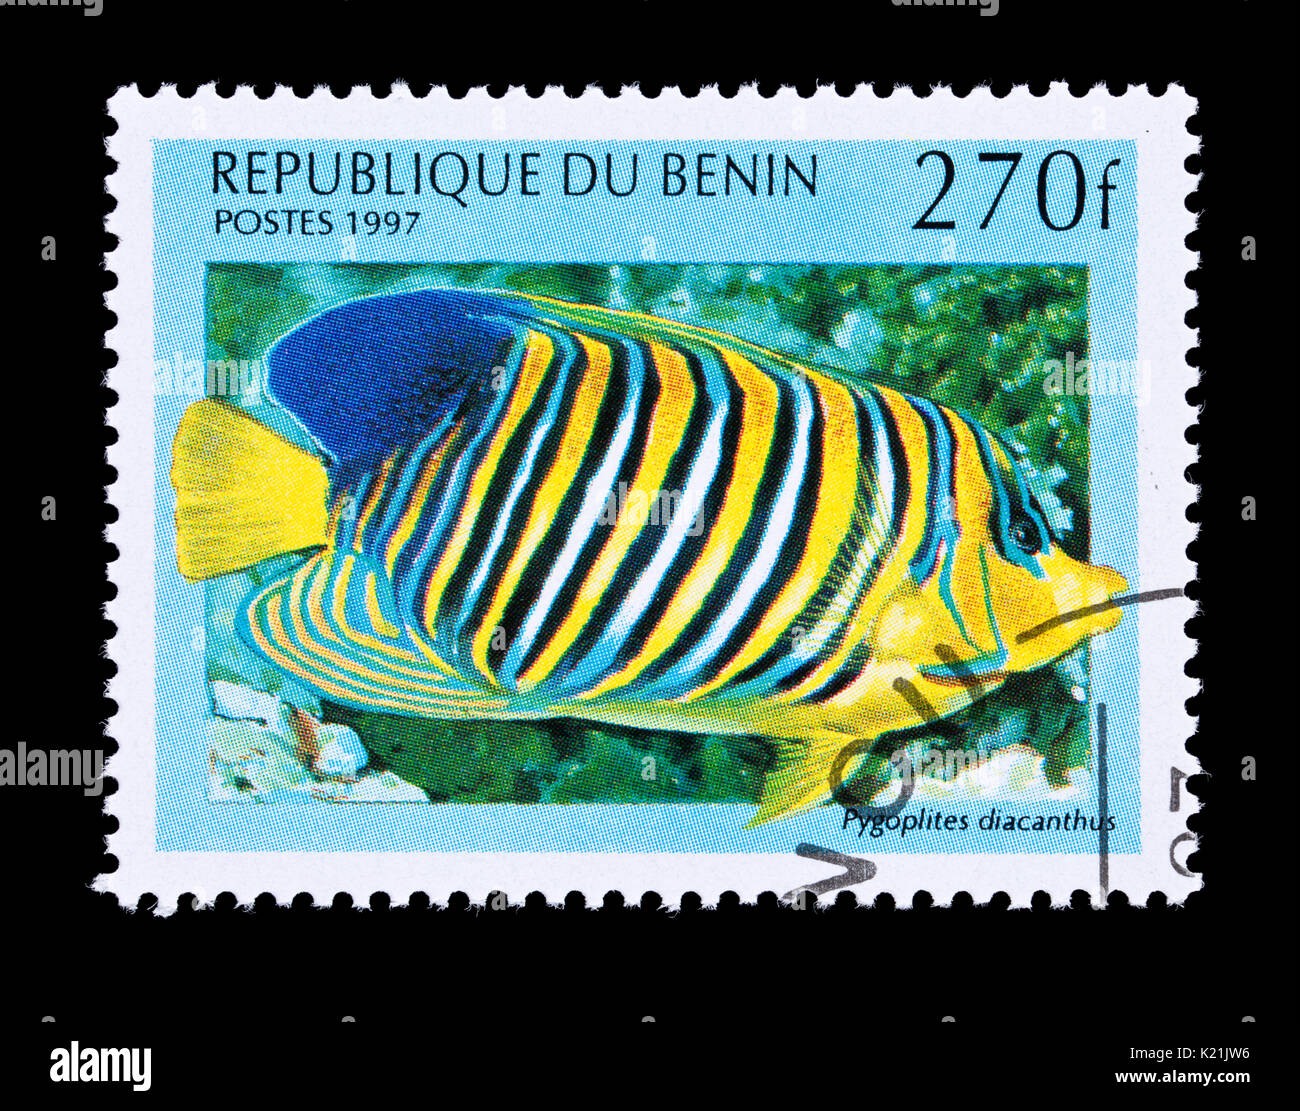 Postage stamp from Benin depicting a Heavybeak parrotfish (Scarus gibbus) Stock Photo